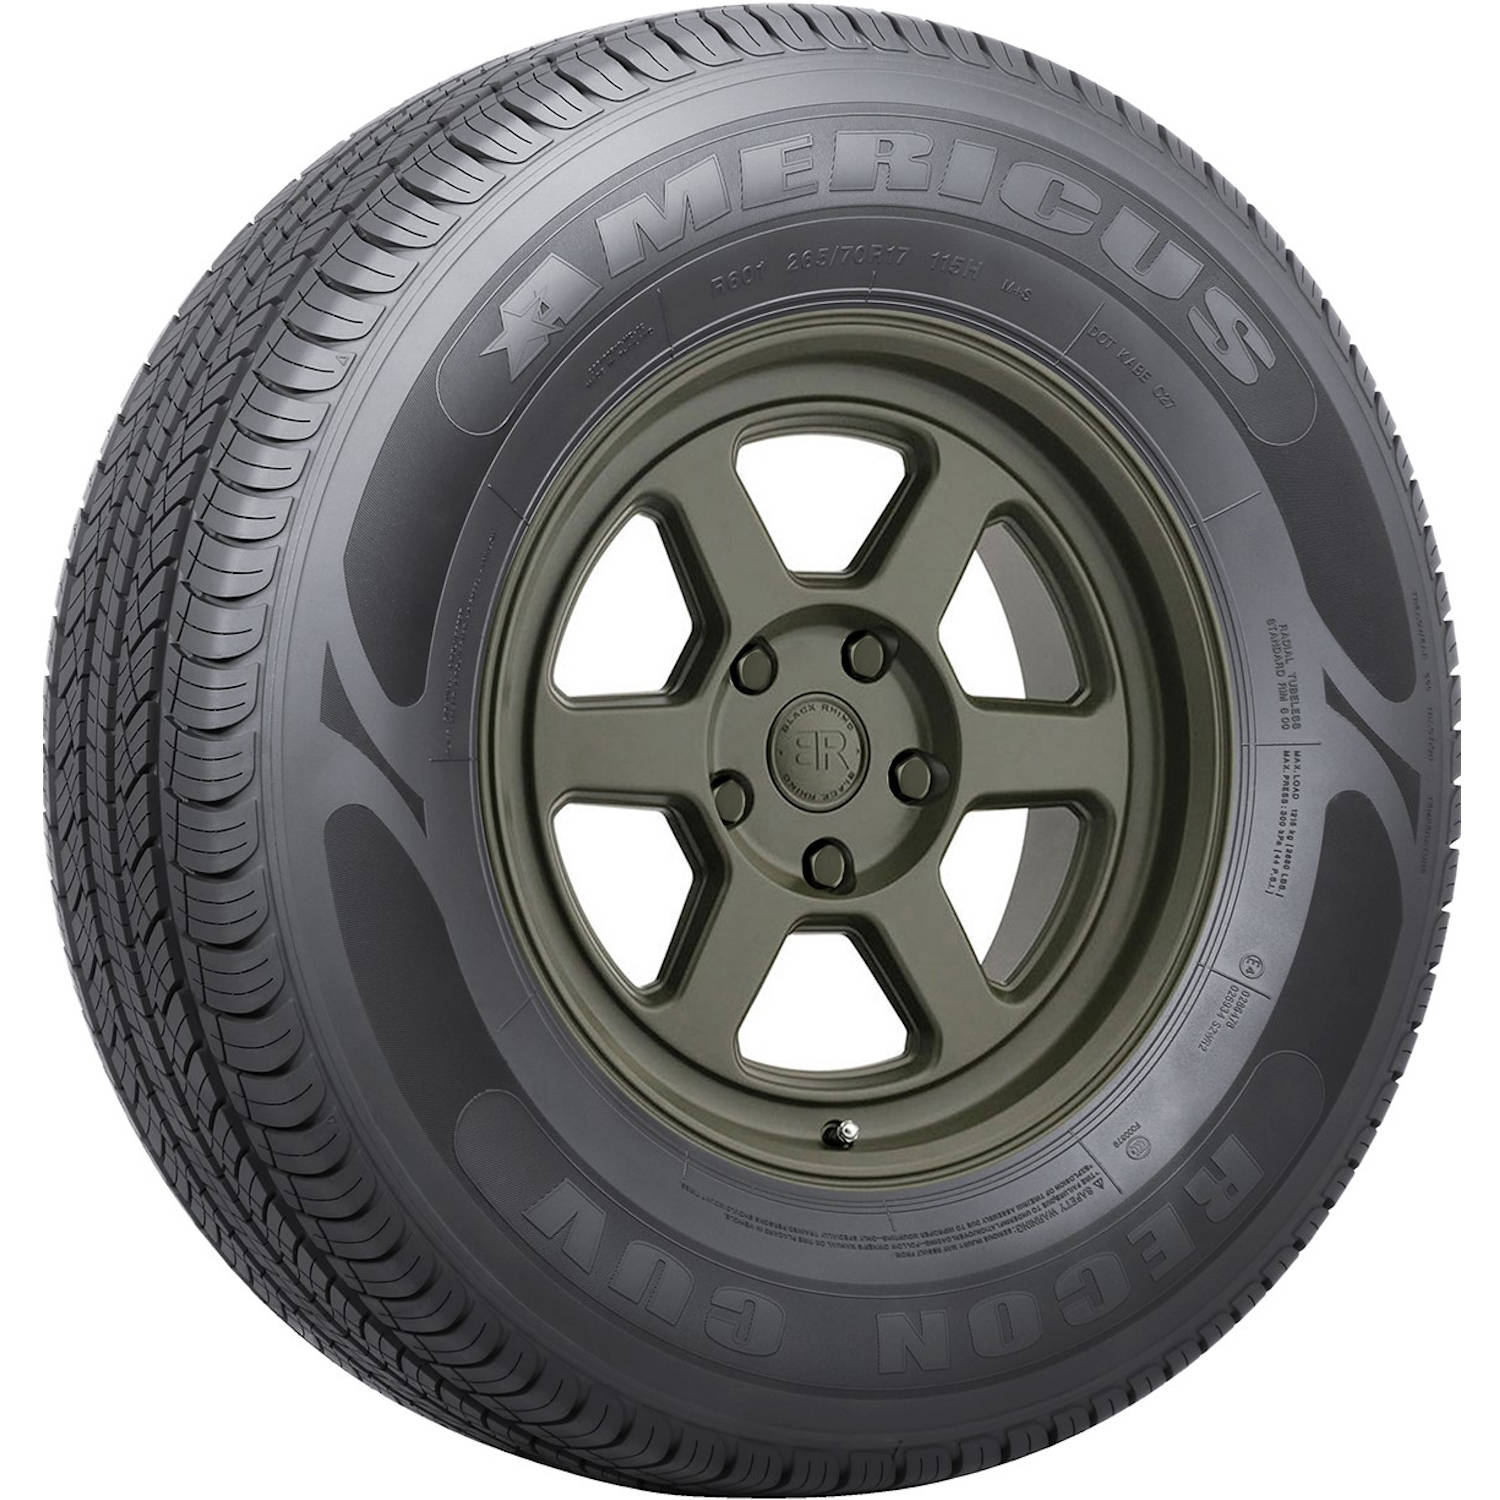 AMERICUS RECON CUV 275/65R18 (32.1X10.8R 18) Tires